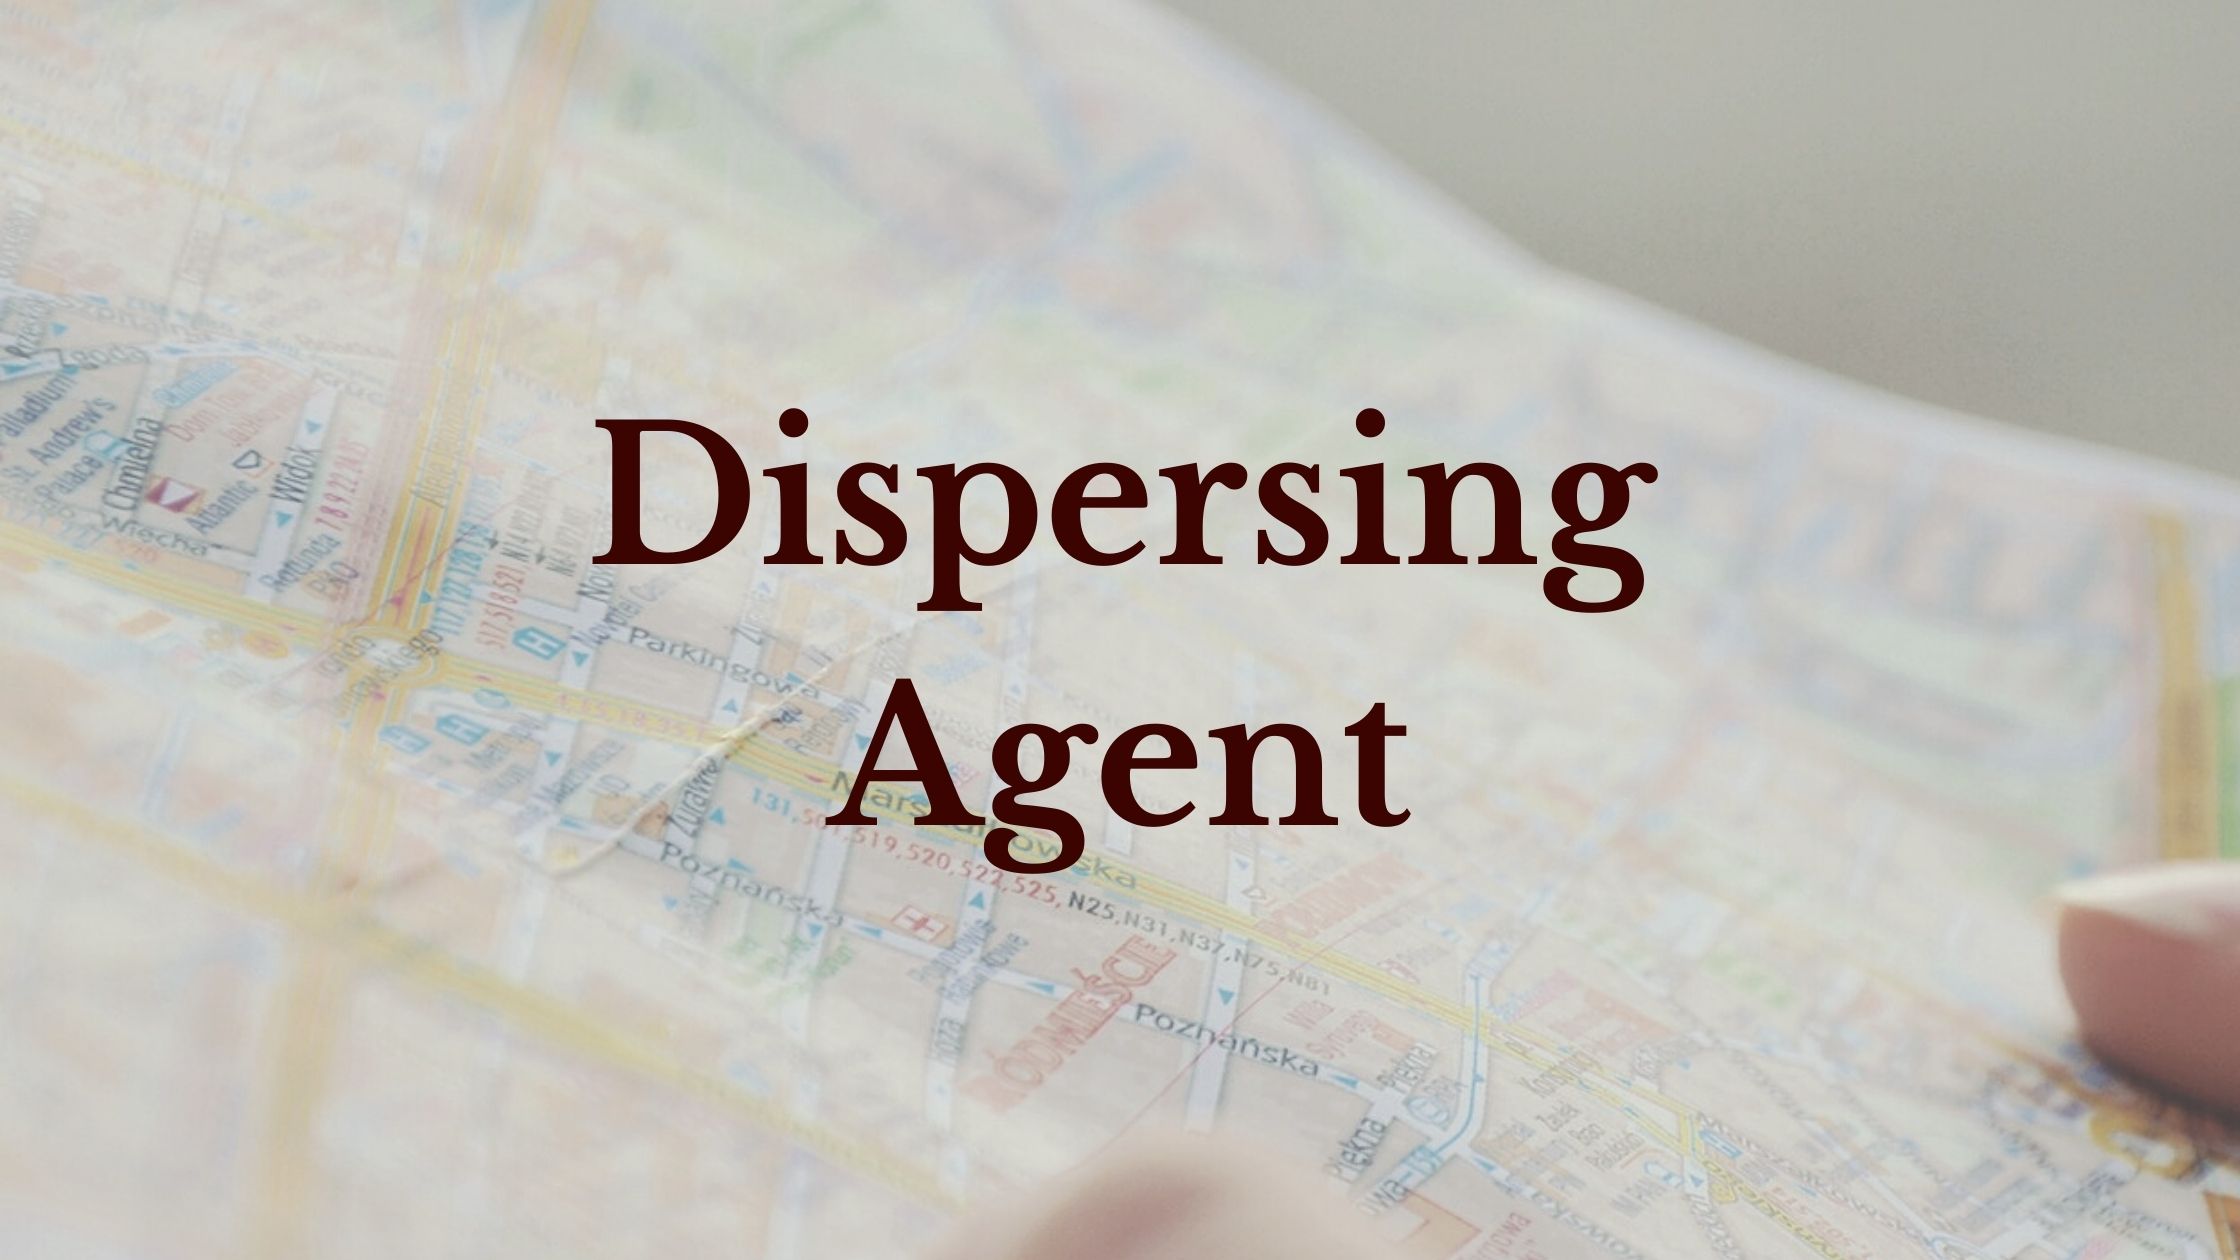 Dispersing agent